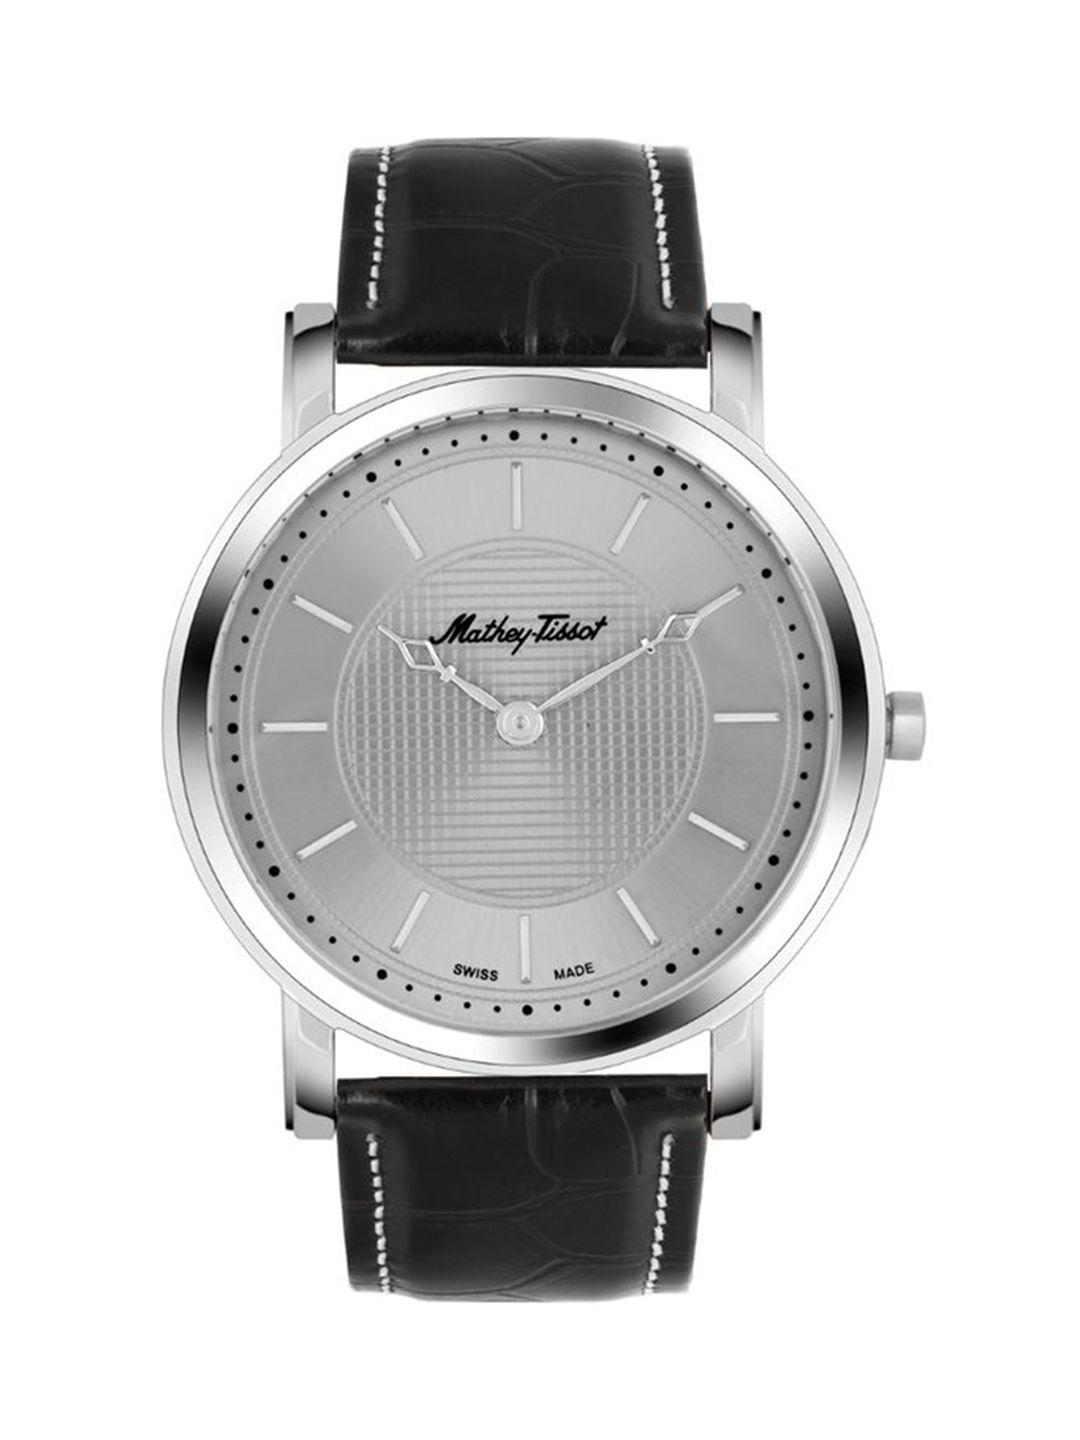 mathey-tissot-men-silver-toned-dial-analogue-watch-hb611251sas